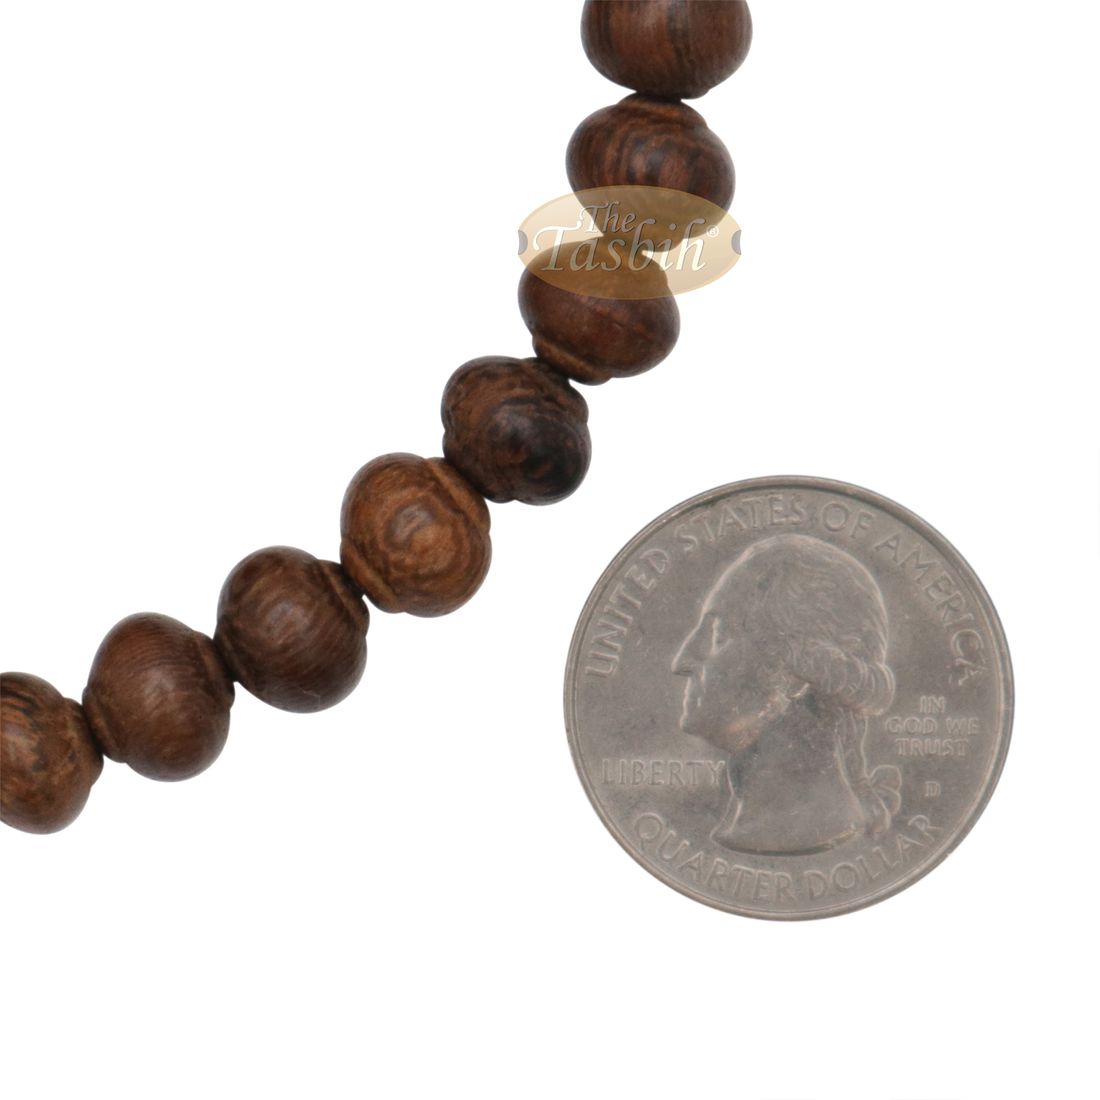 Wooden Islamic Prayer Beads – Natural Johar Asian Wenge Wood Tasbih 99ct Contoured 8x7mm Beads with Black Tassels in GIFT BOX